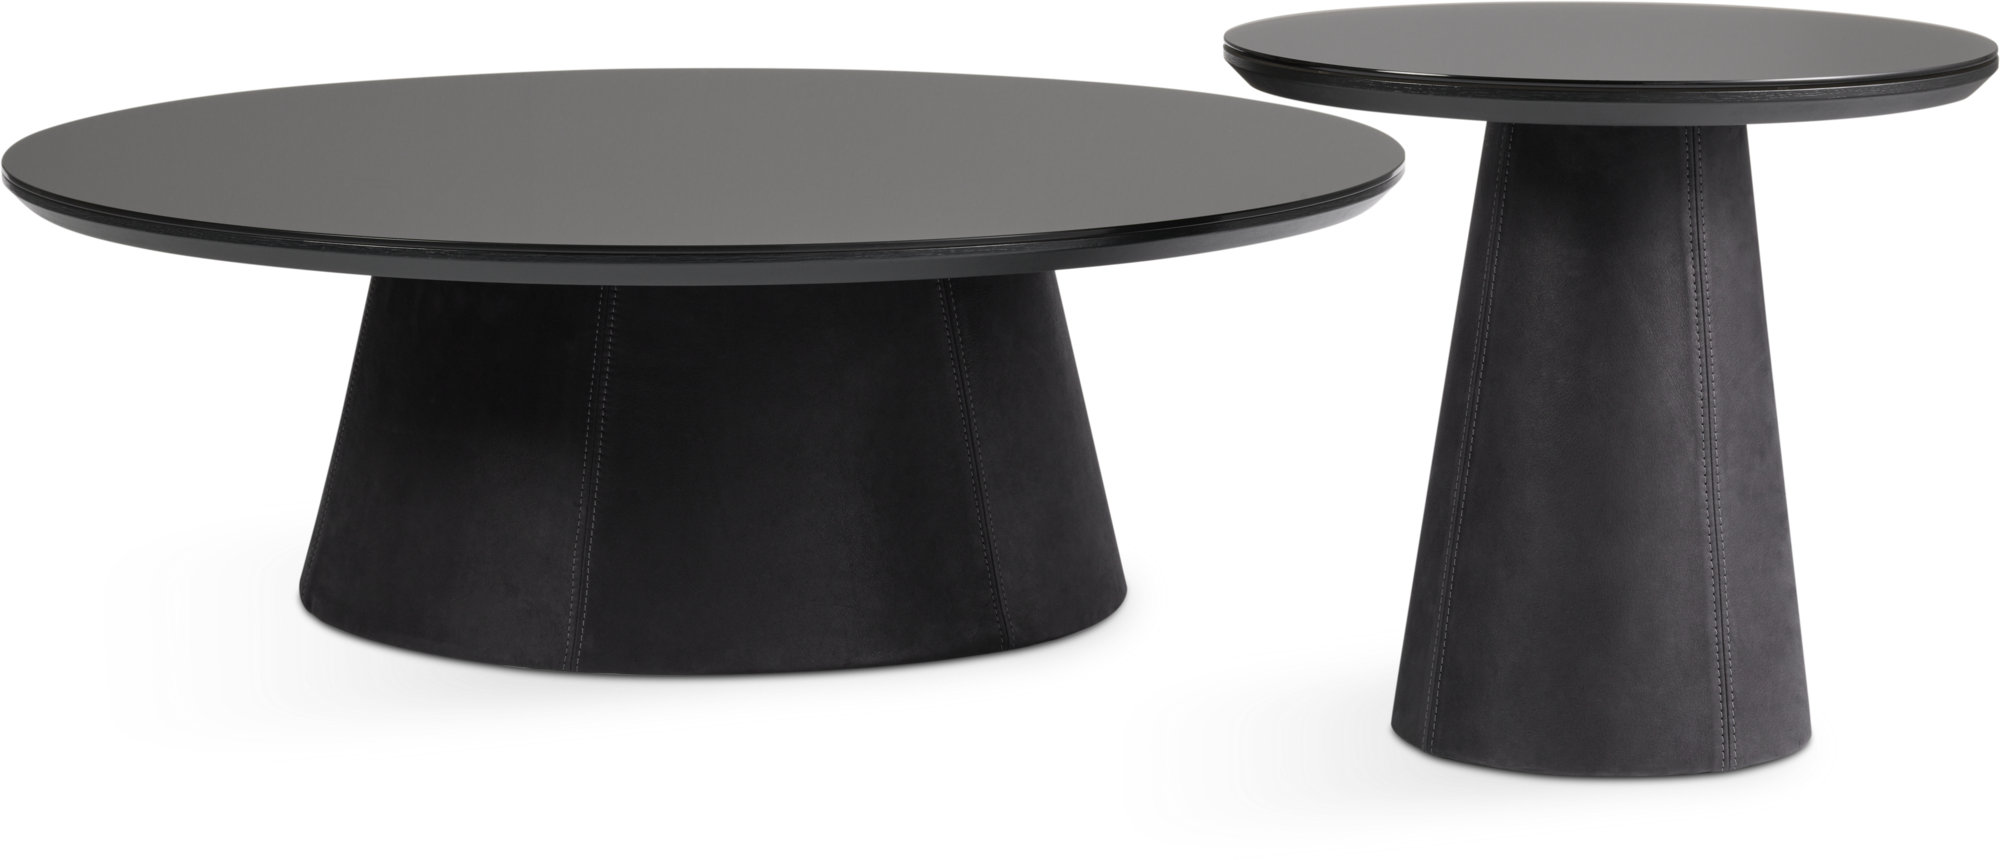 Zuna side table